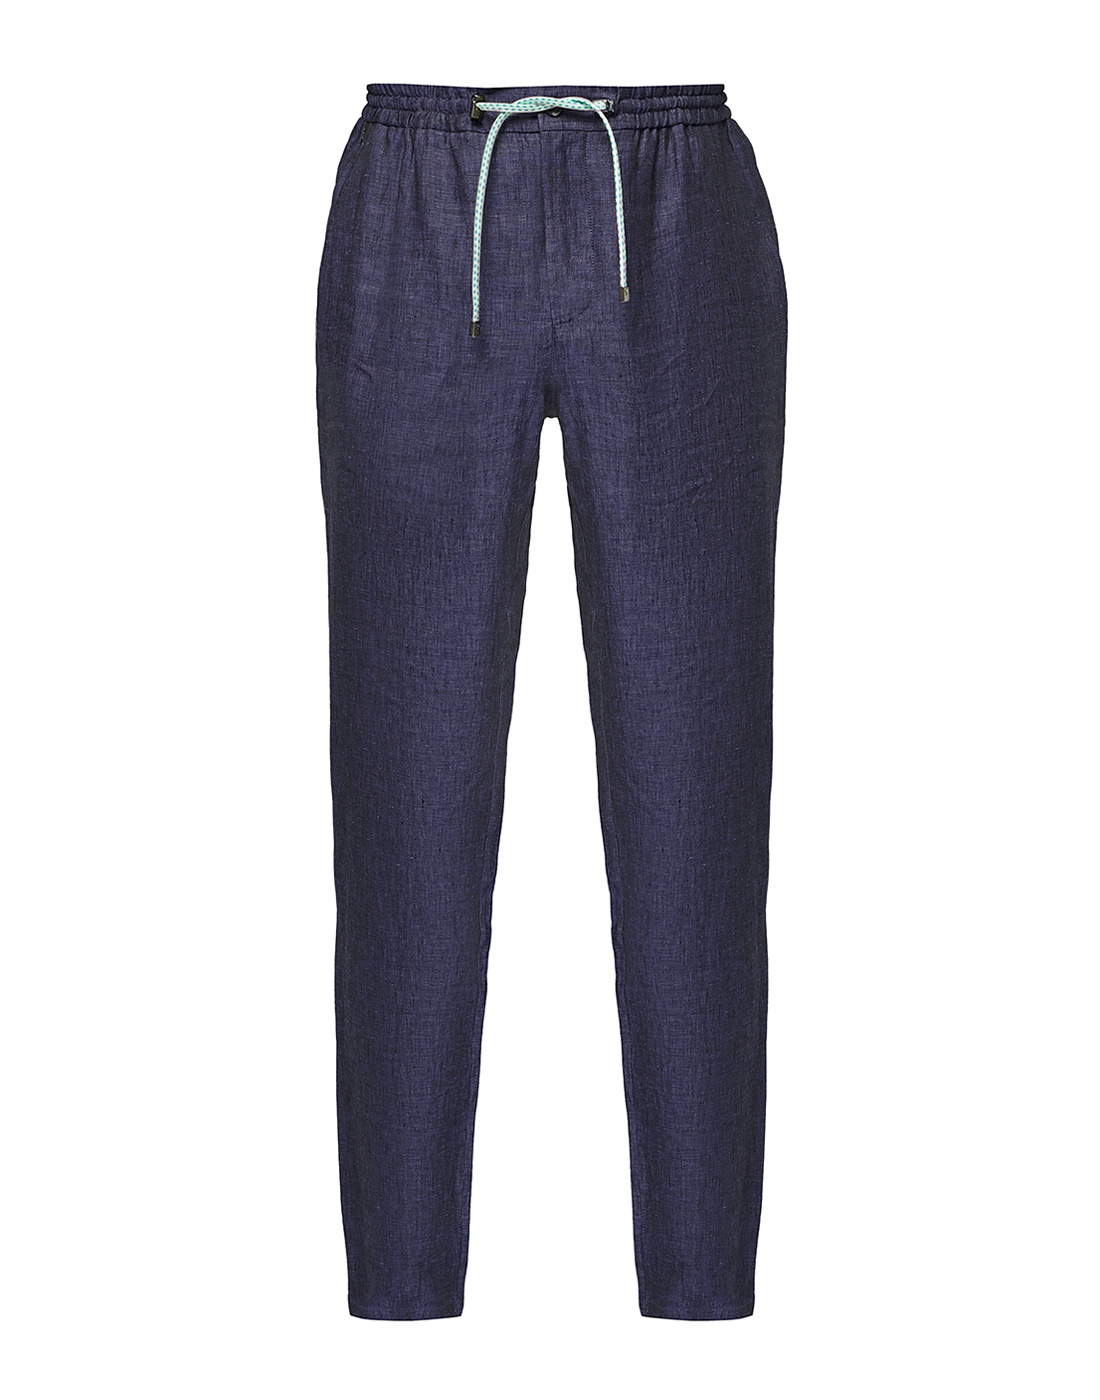 Мужские темно-синие льняные брюки Capobianco S10M804.LI00.MARINE-1